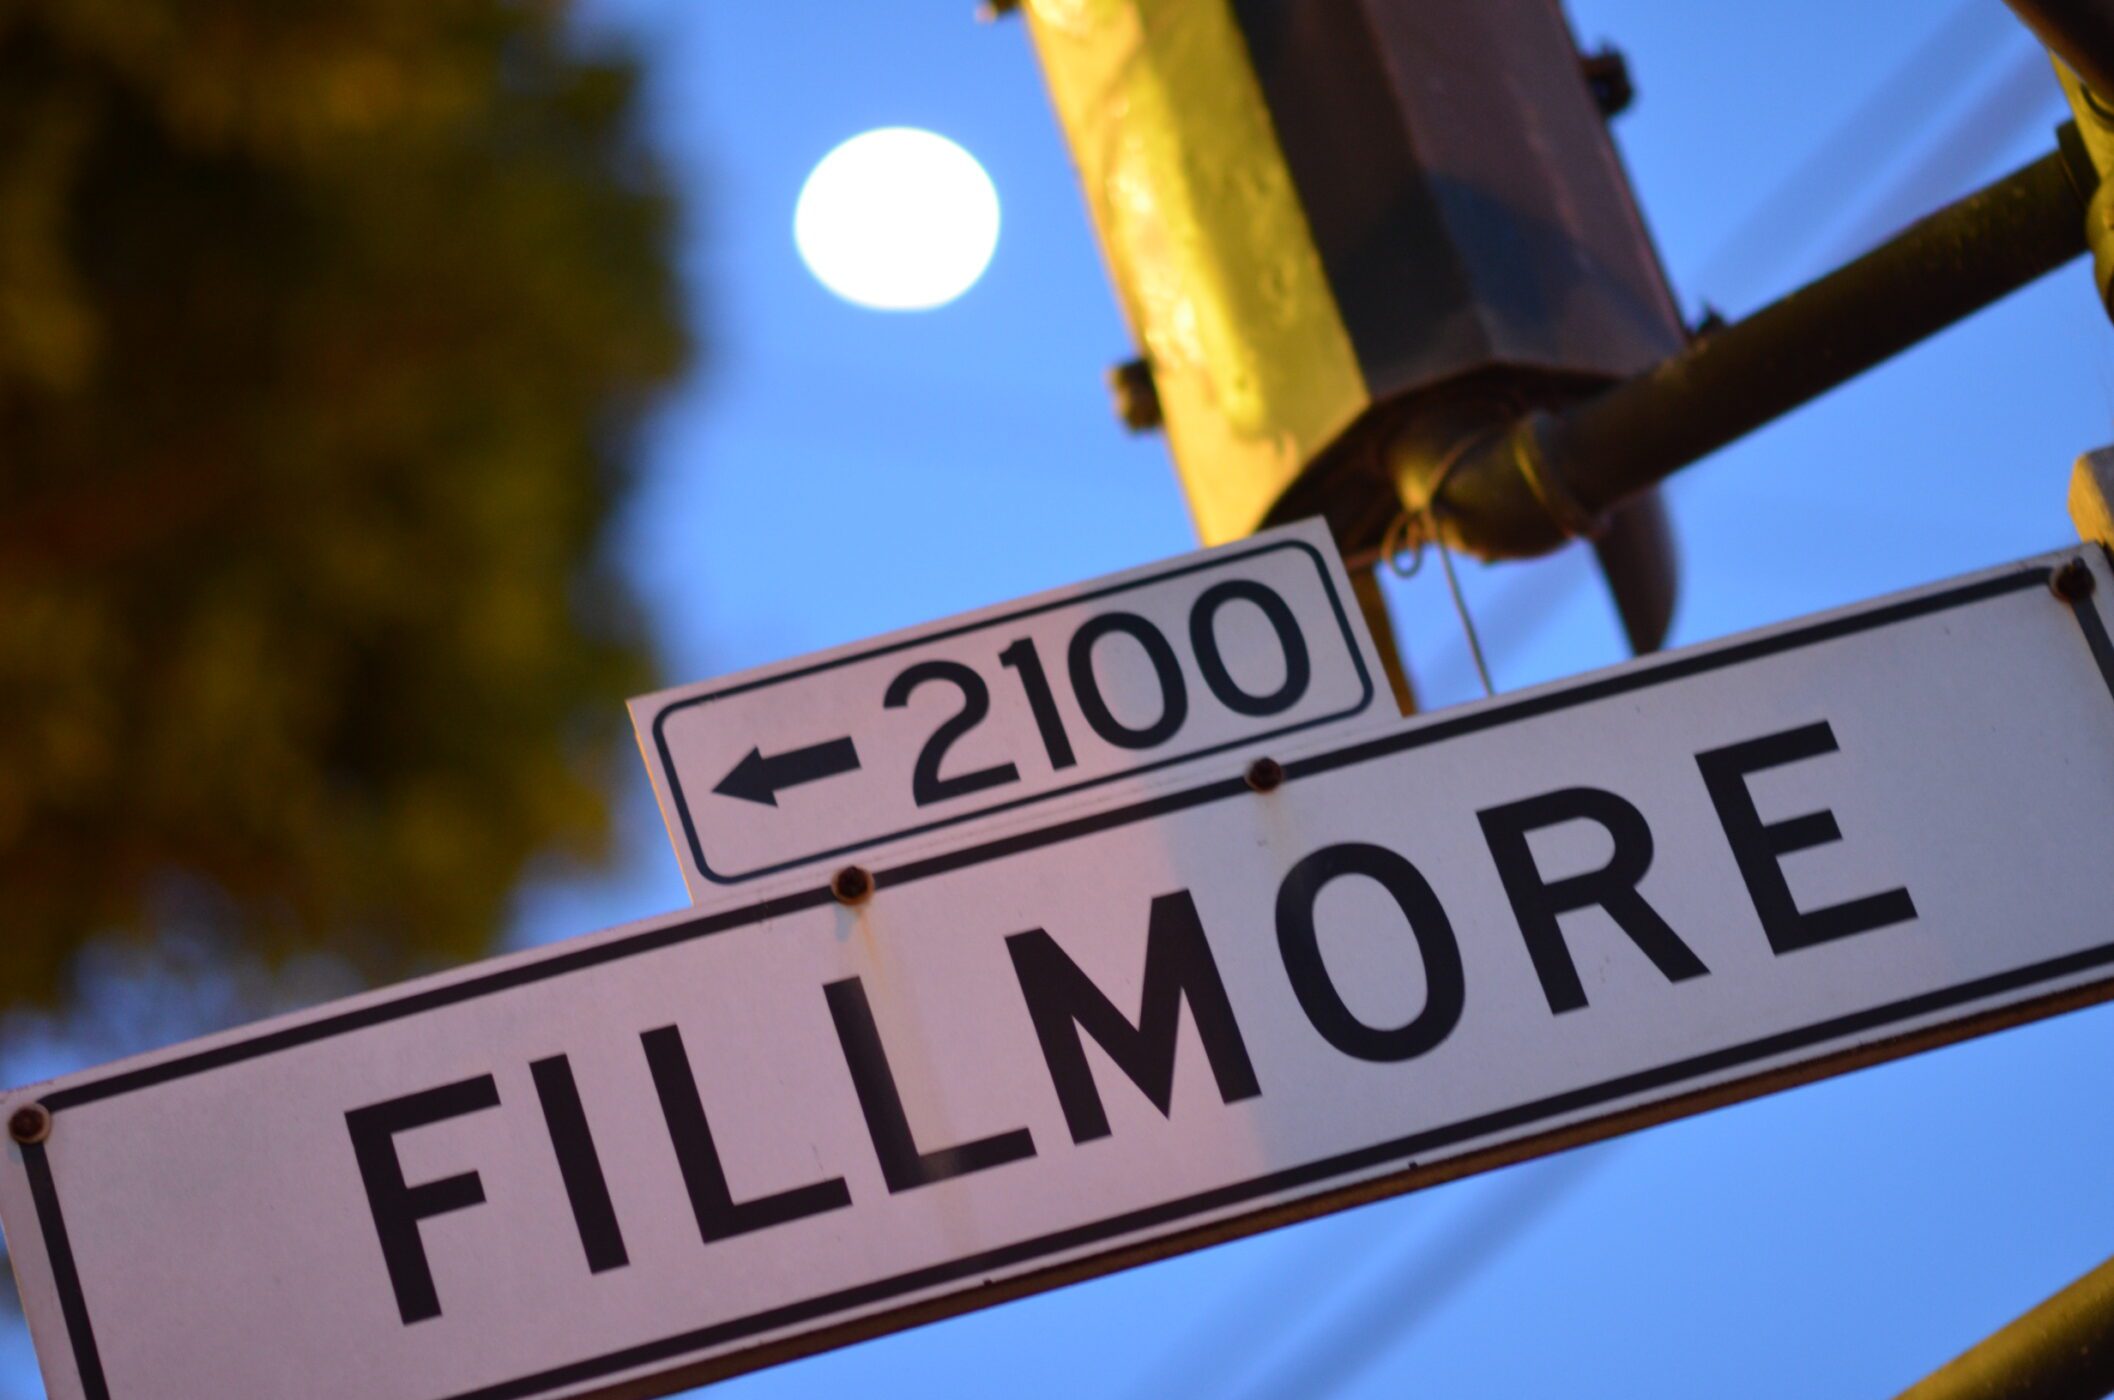 Fillmore Street Press Photo